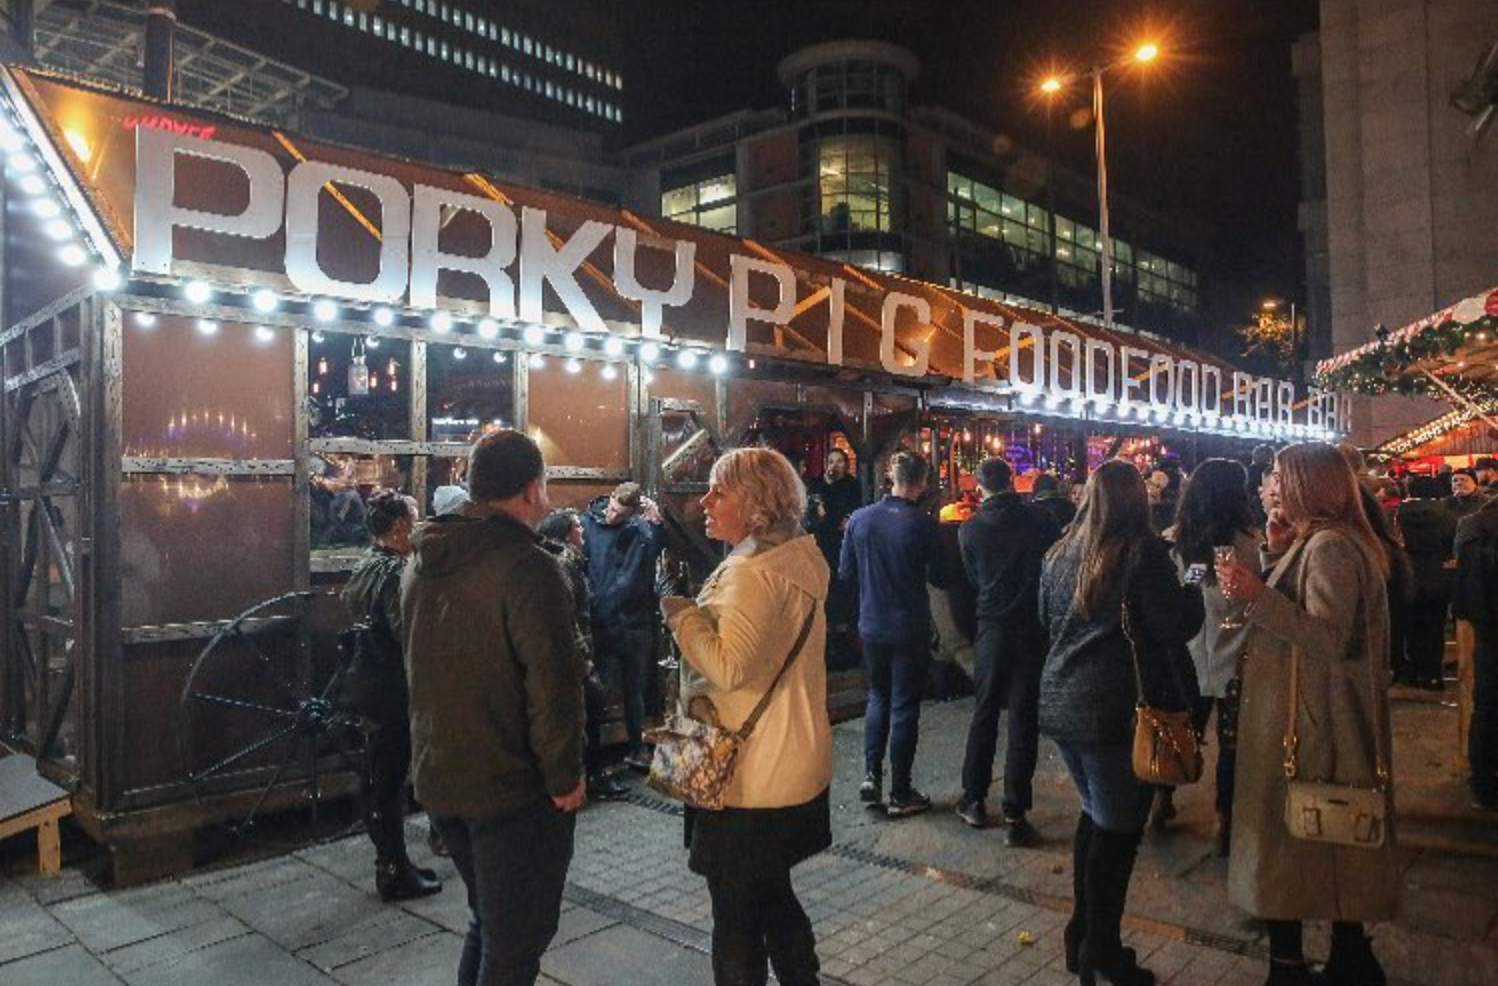 Porky Pig has permanently closed its Manchester city centre cafe, The Manc